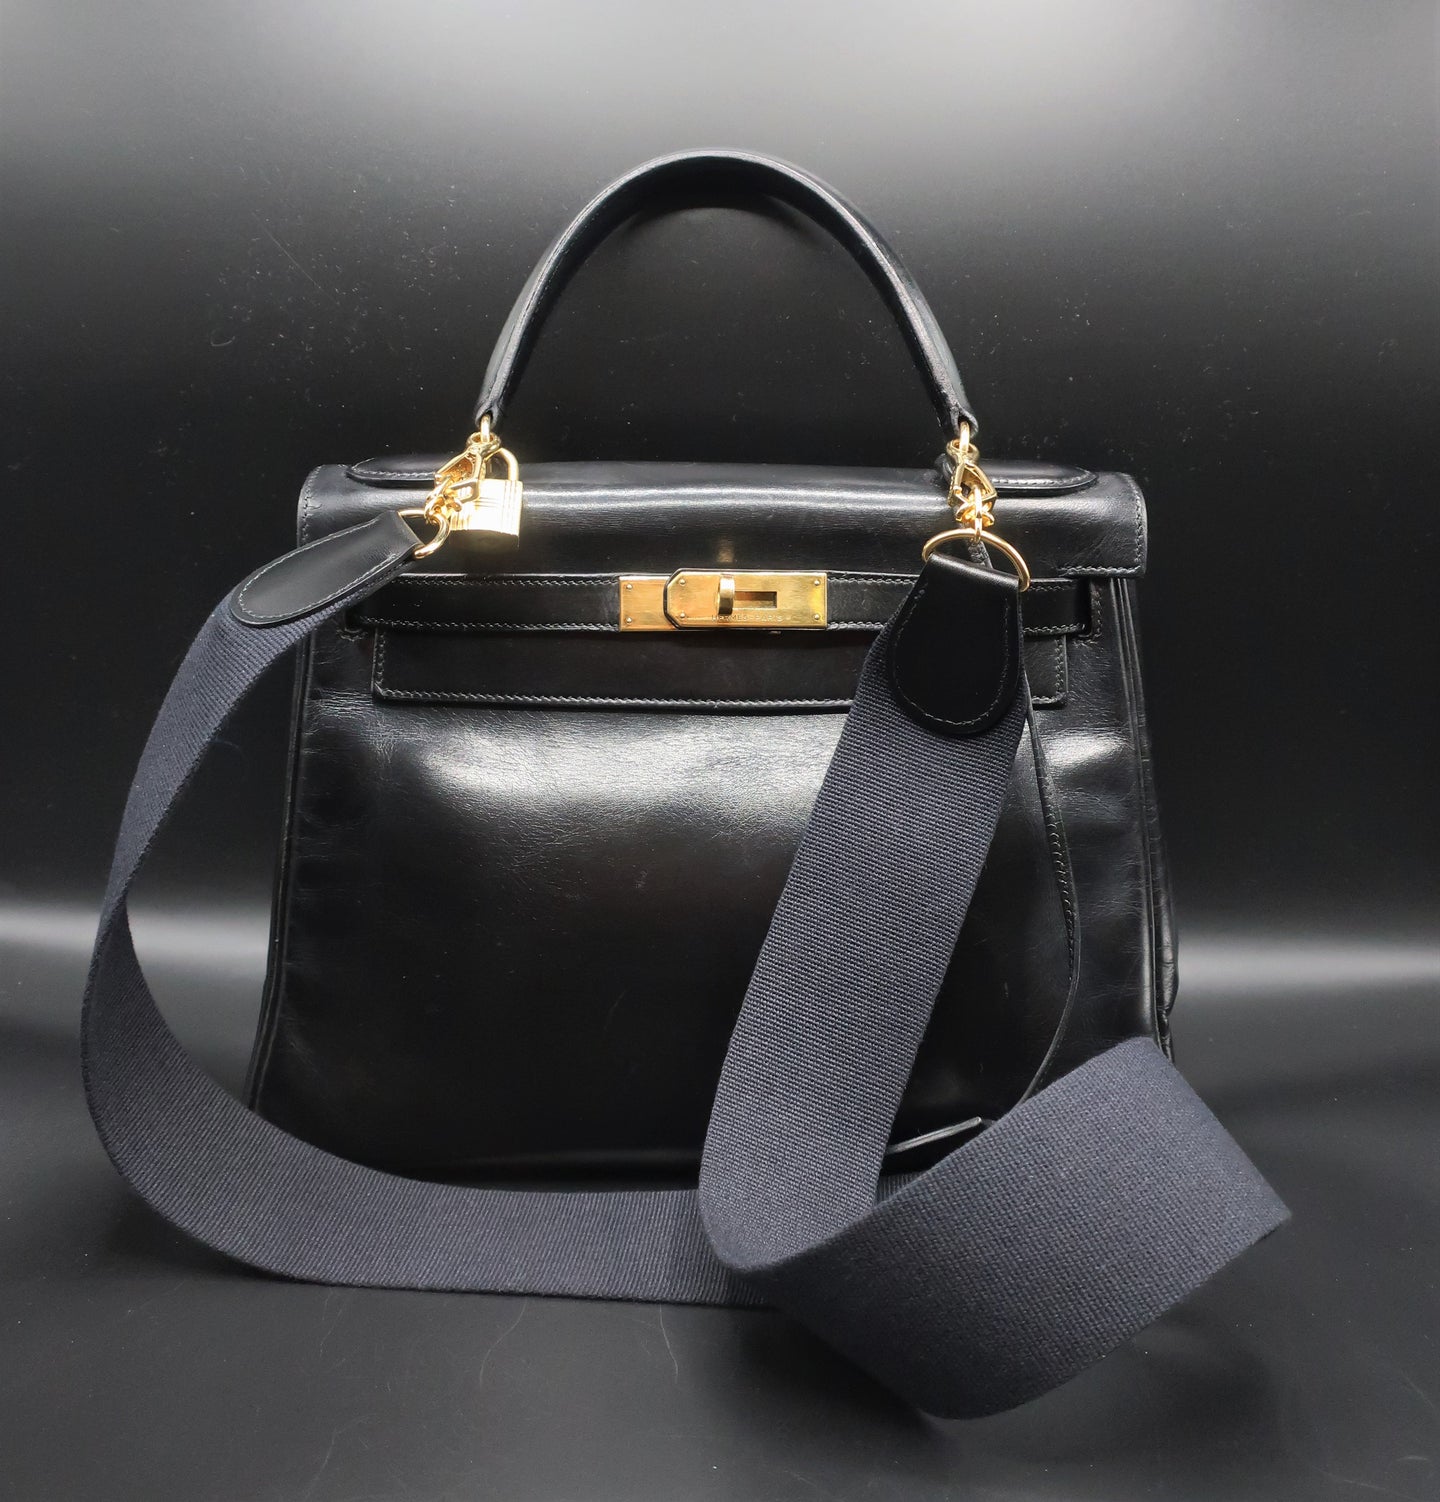 Hermès Black Kelly Bag 28 CM